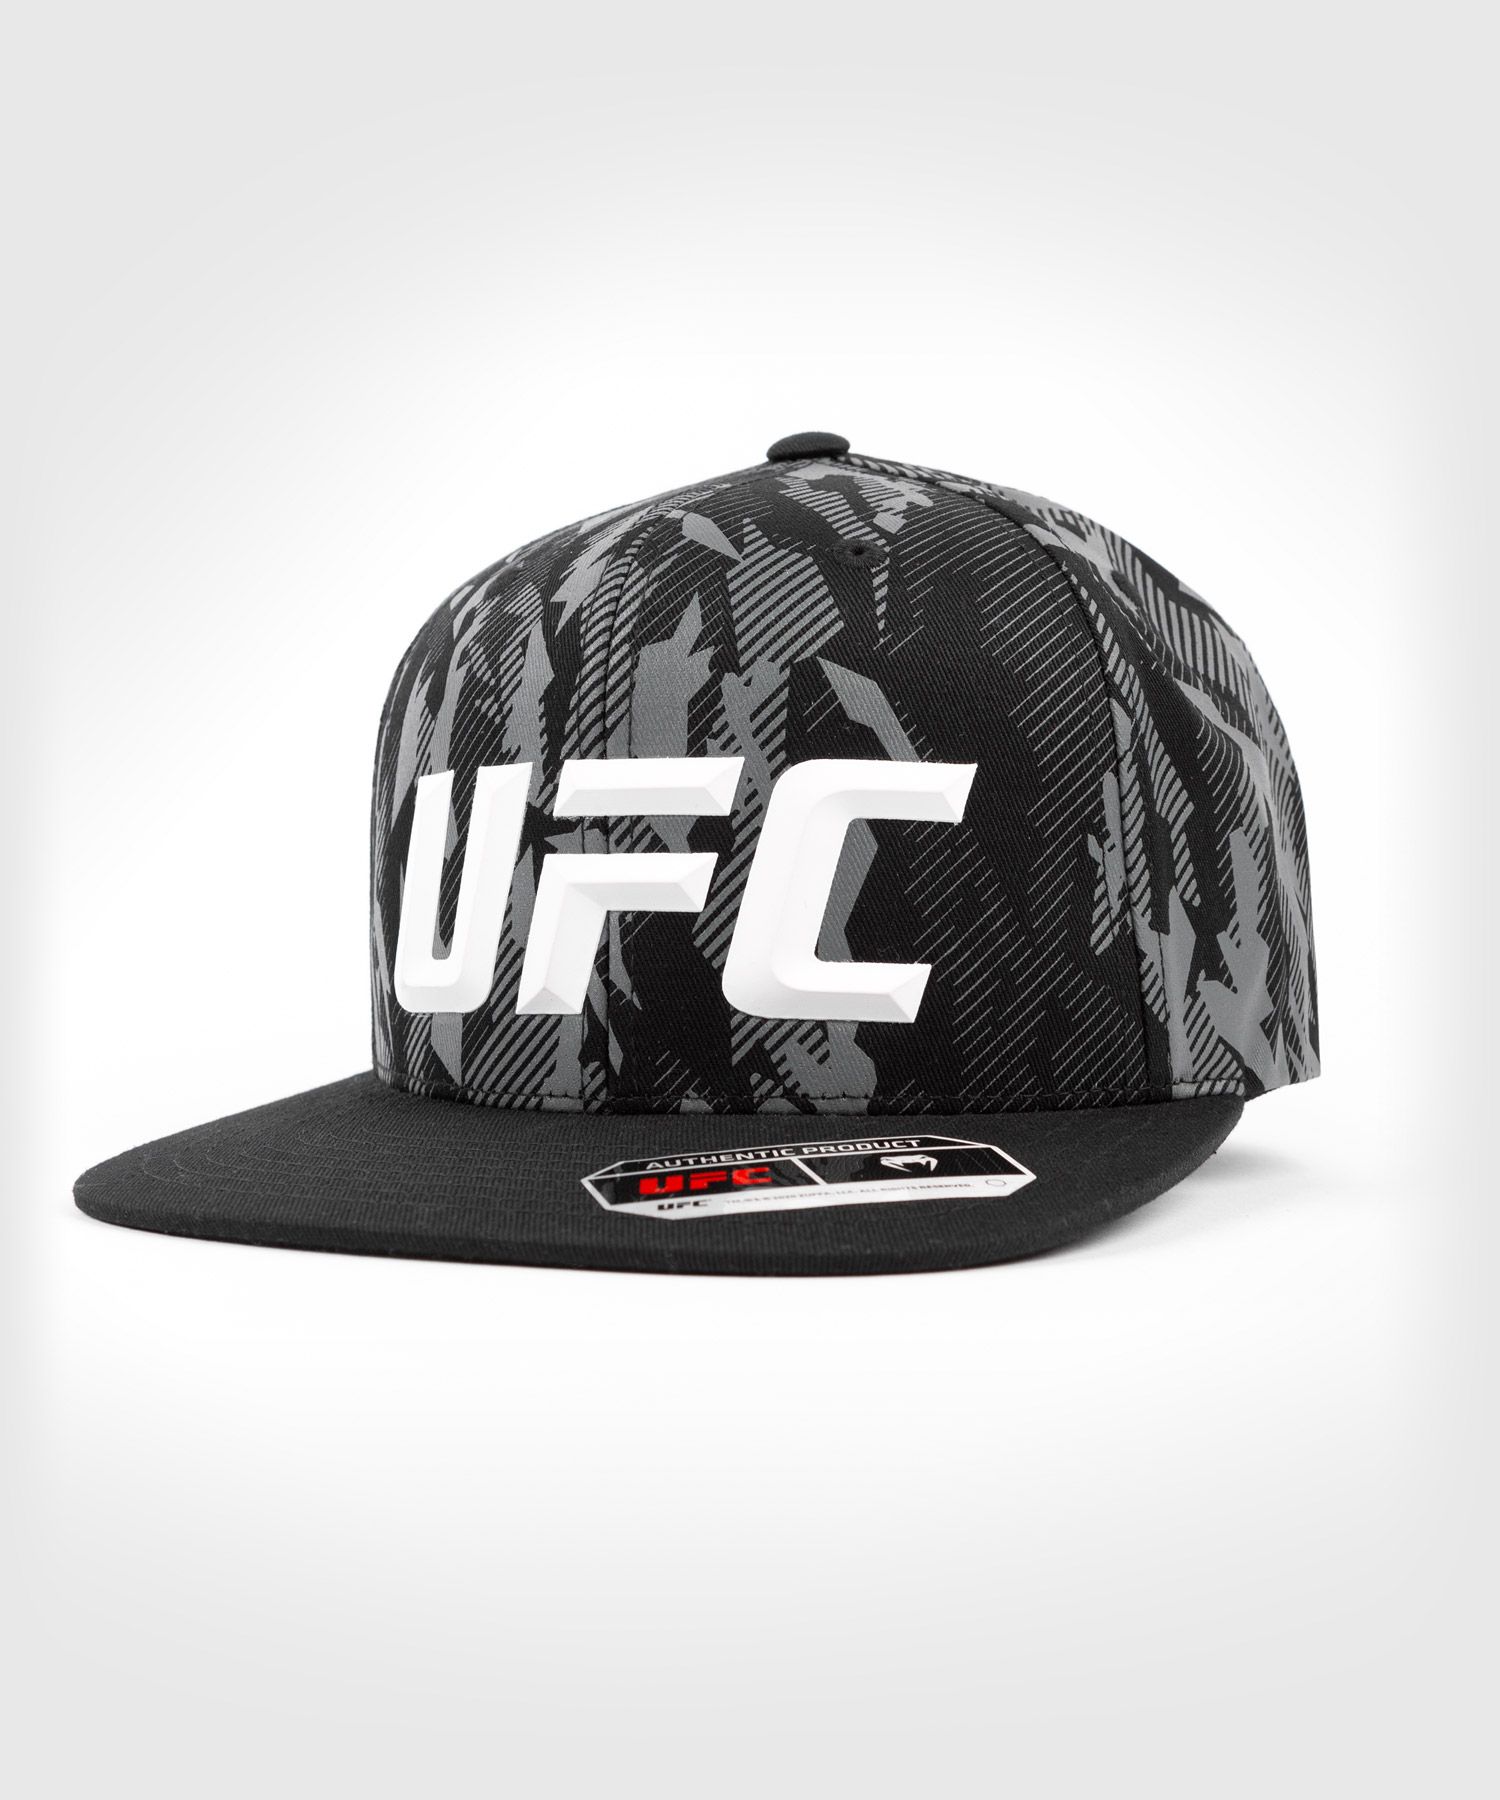 UFC Venum Authentic Fight Week Unisex Hat - Black